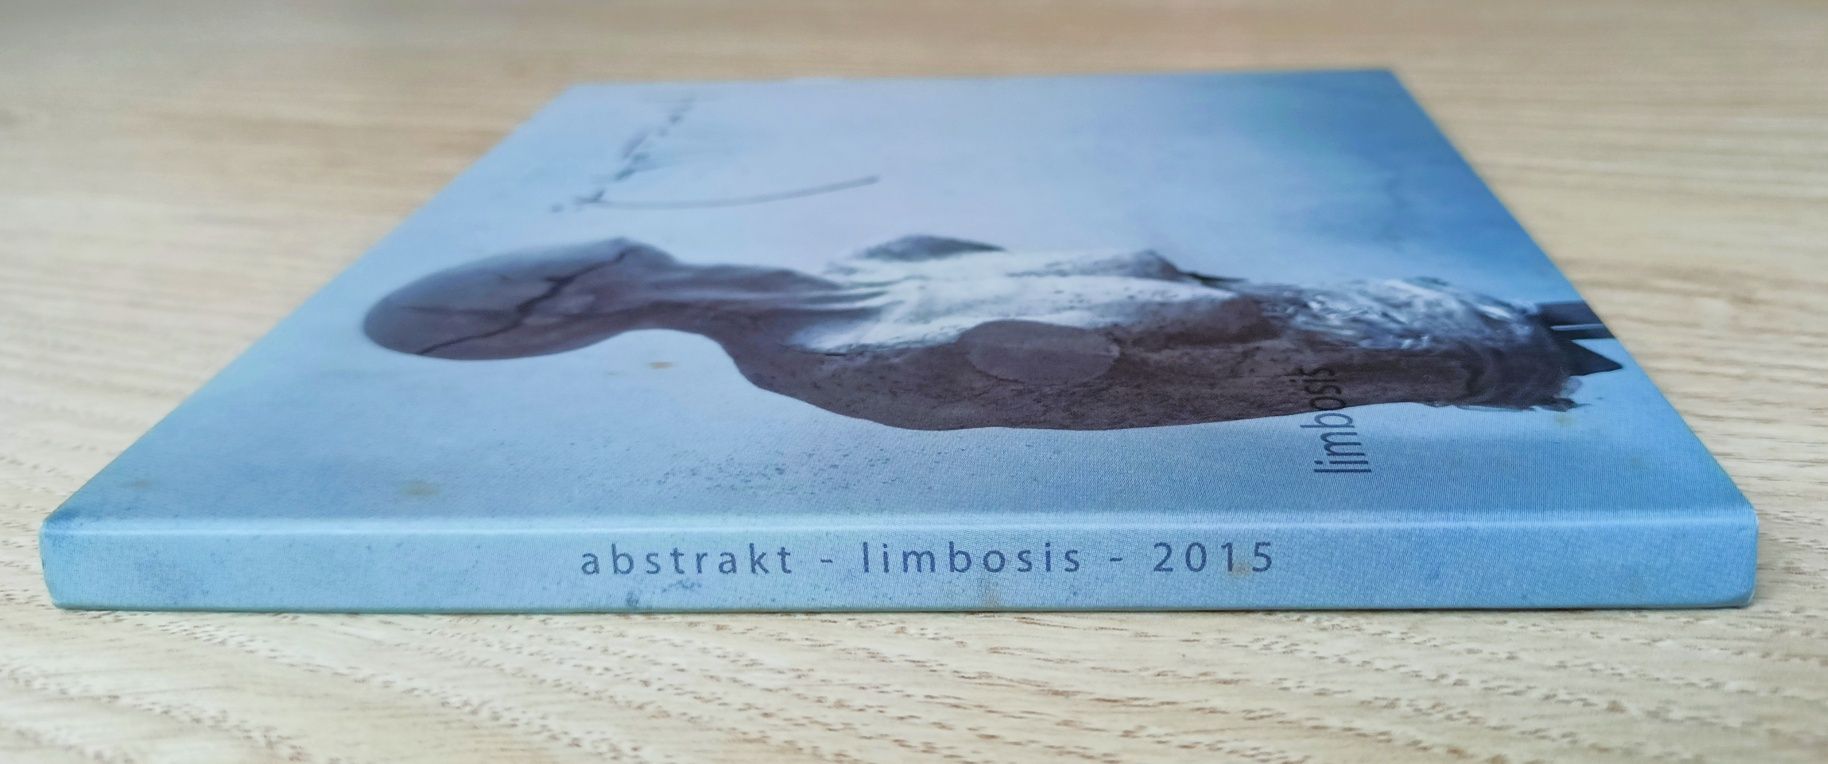 Abstrakt - Limbosis CD autografy